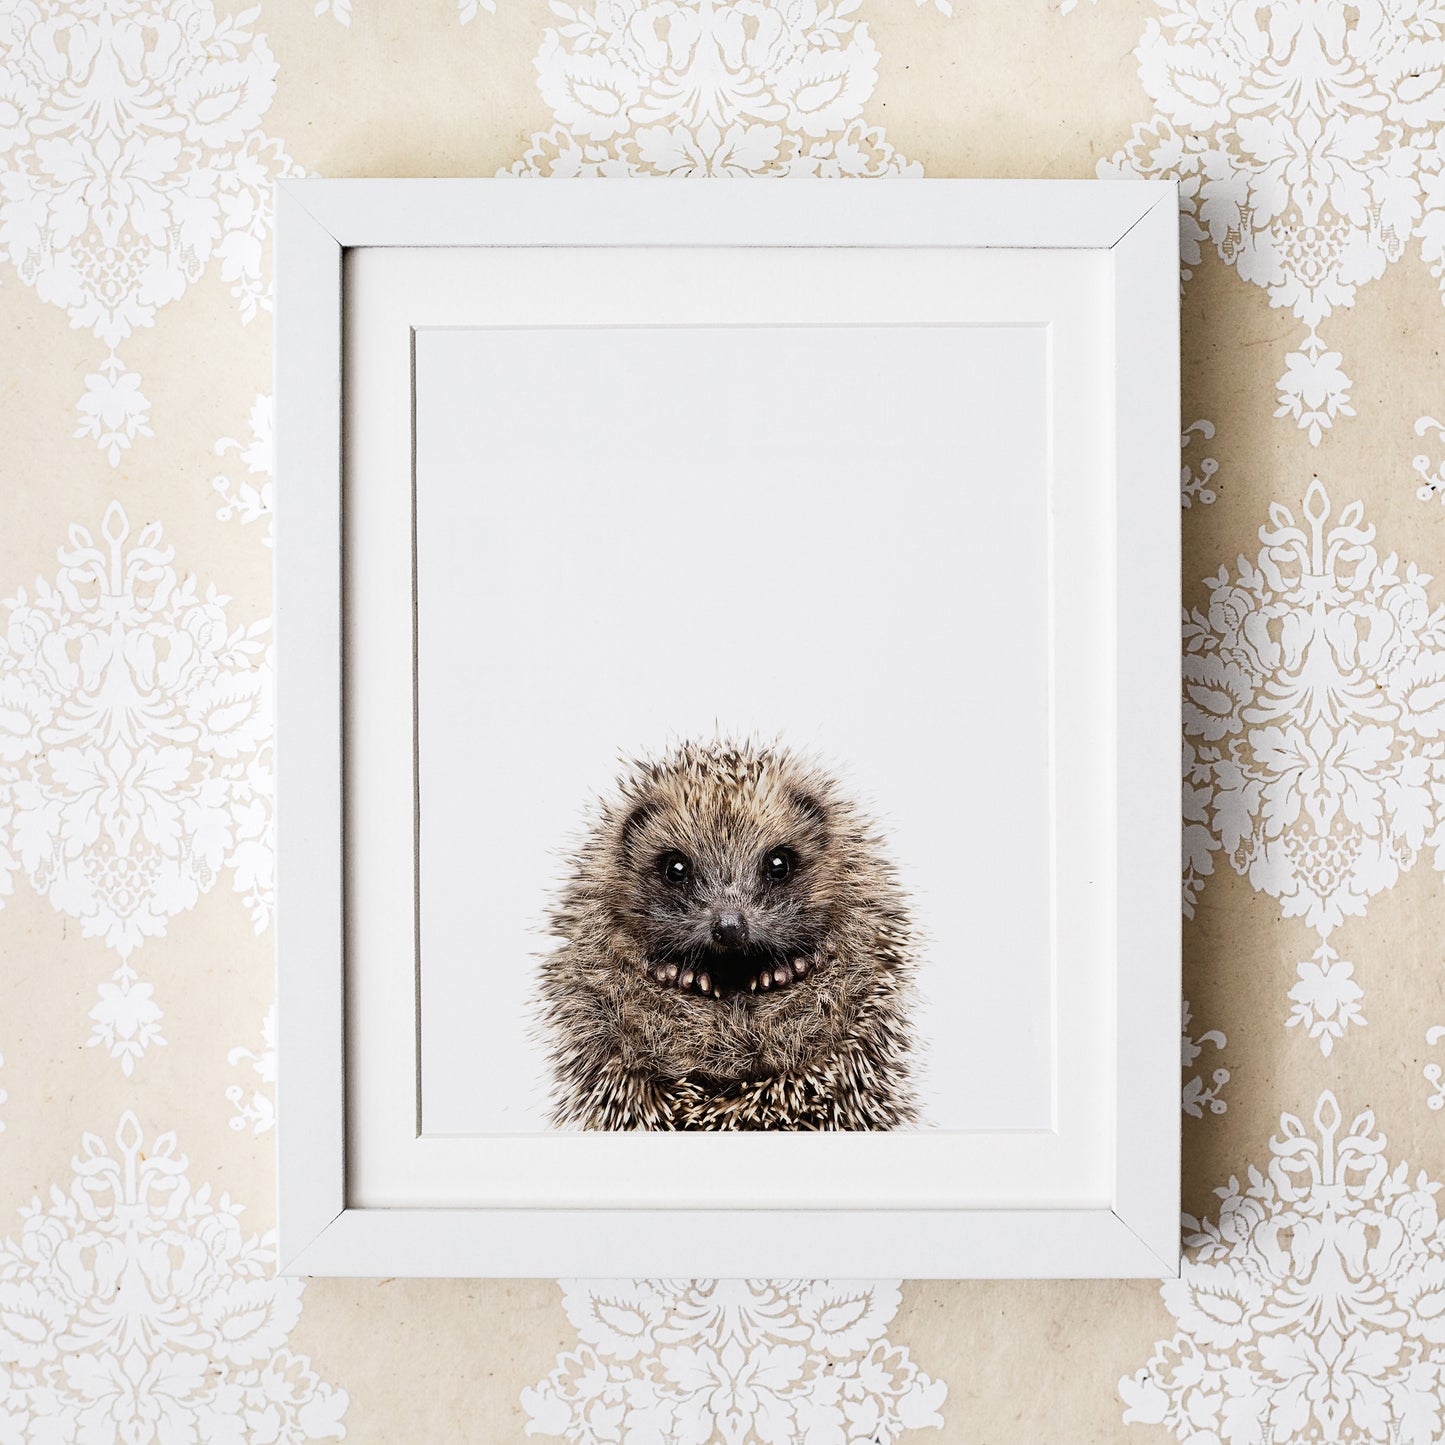 framed Baby Hedgehog Nursery Wall Art Print